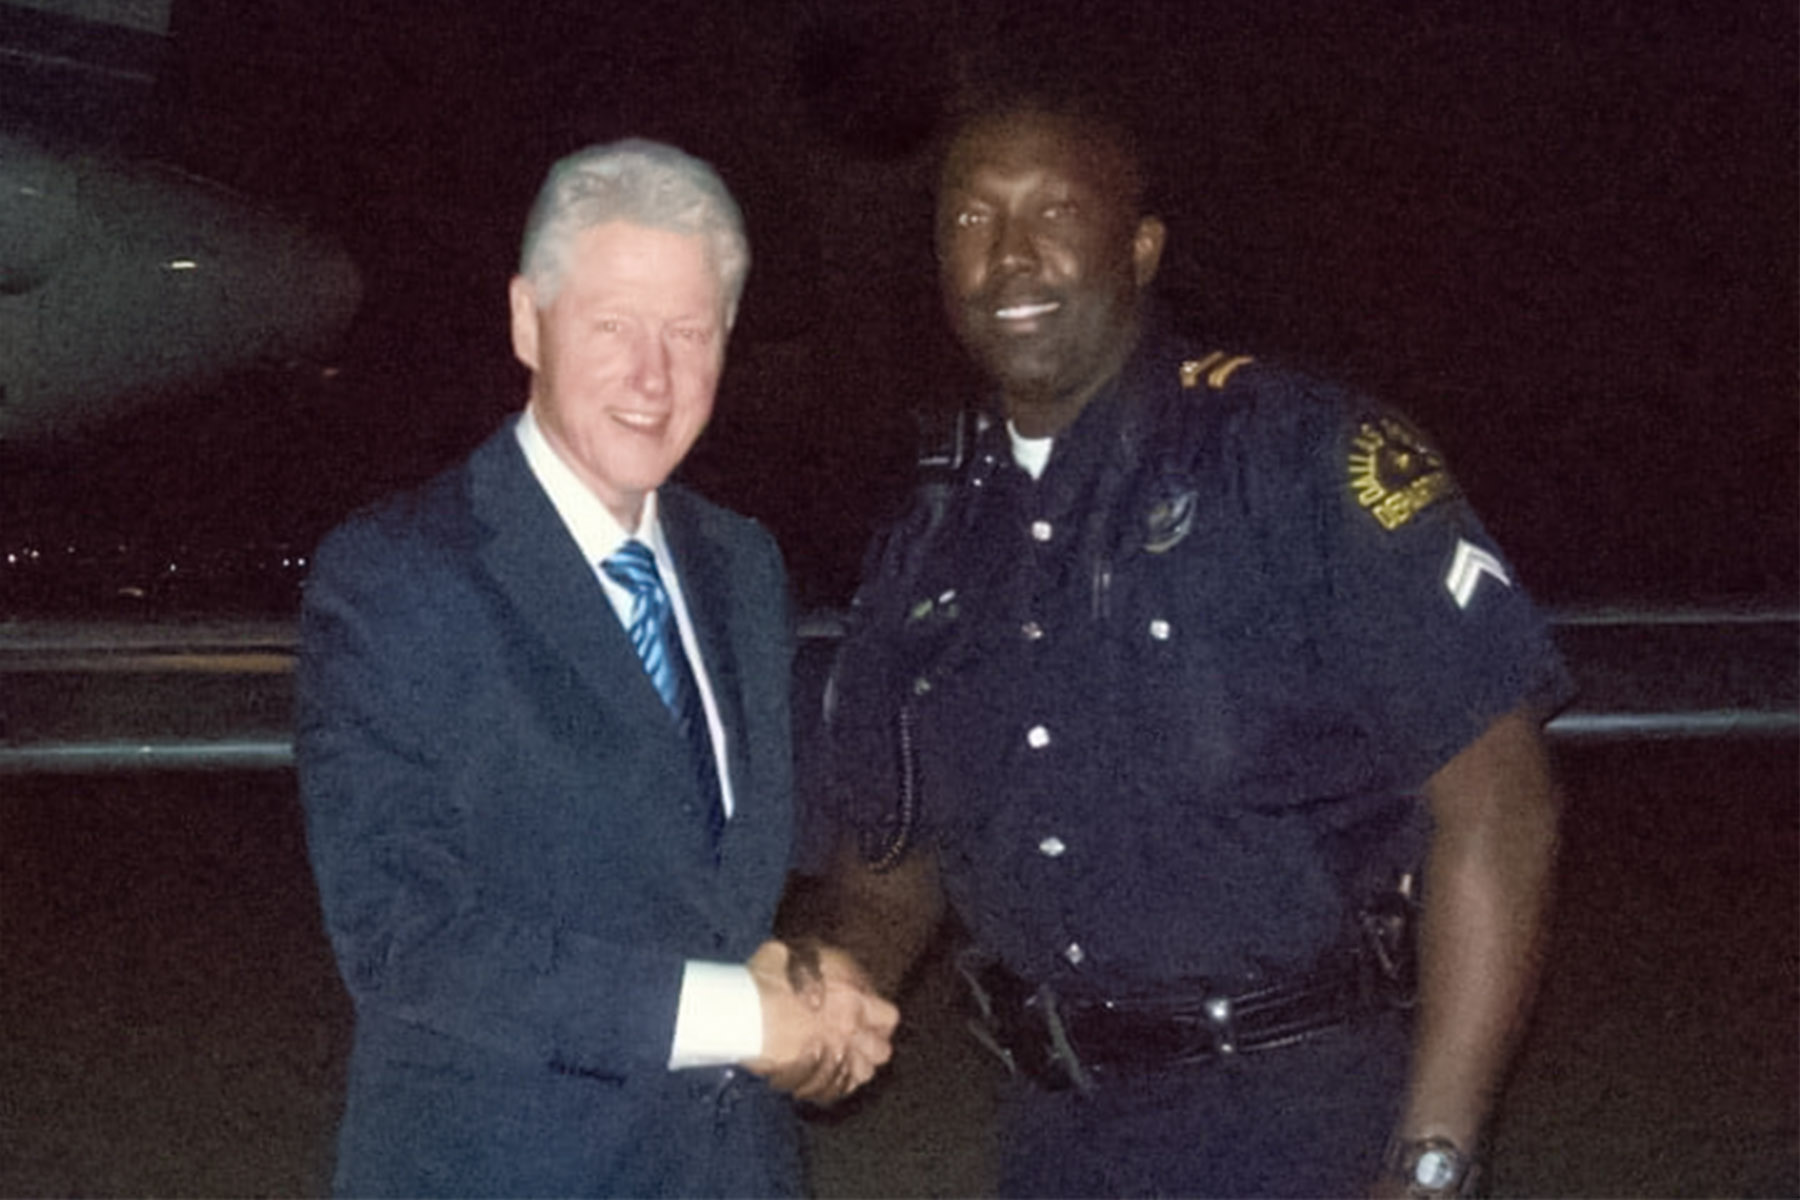 Larry Gordon with Bill Clinton